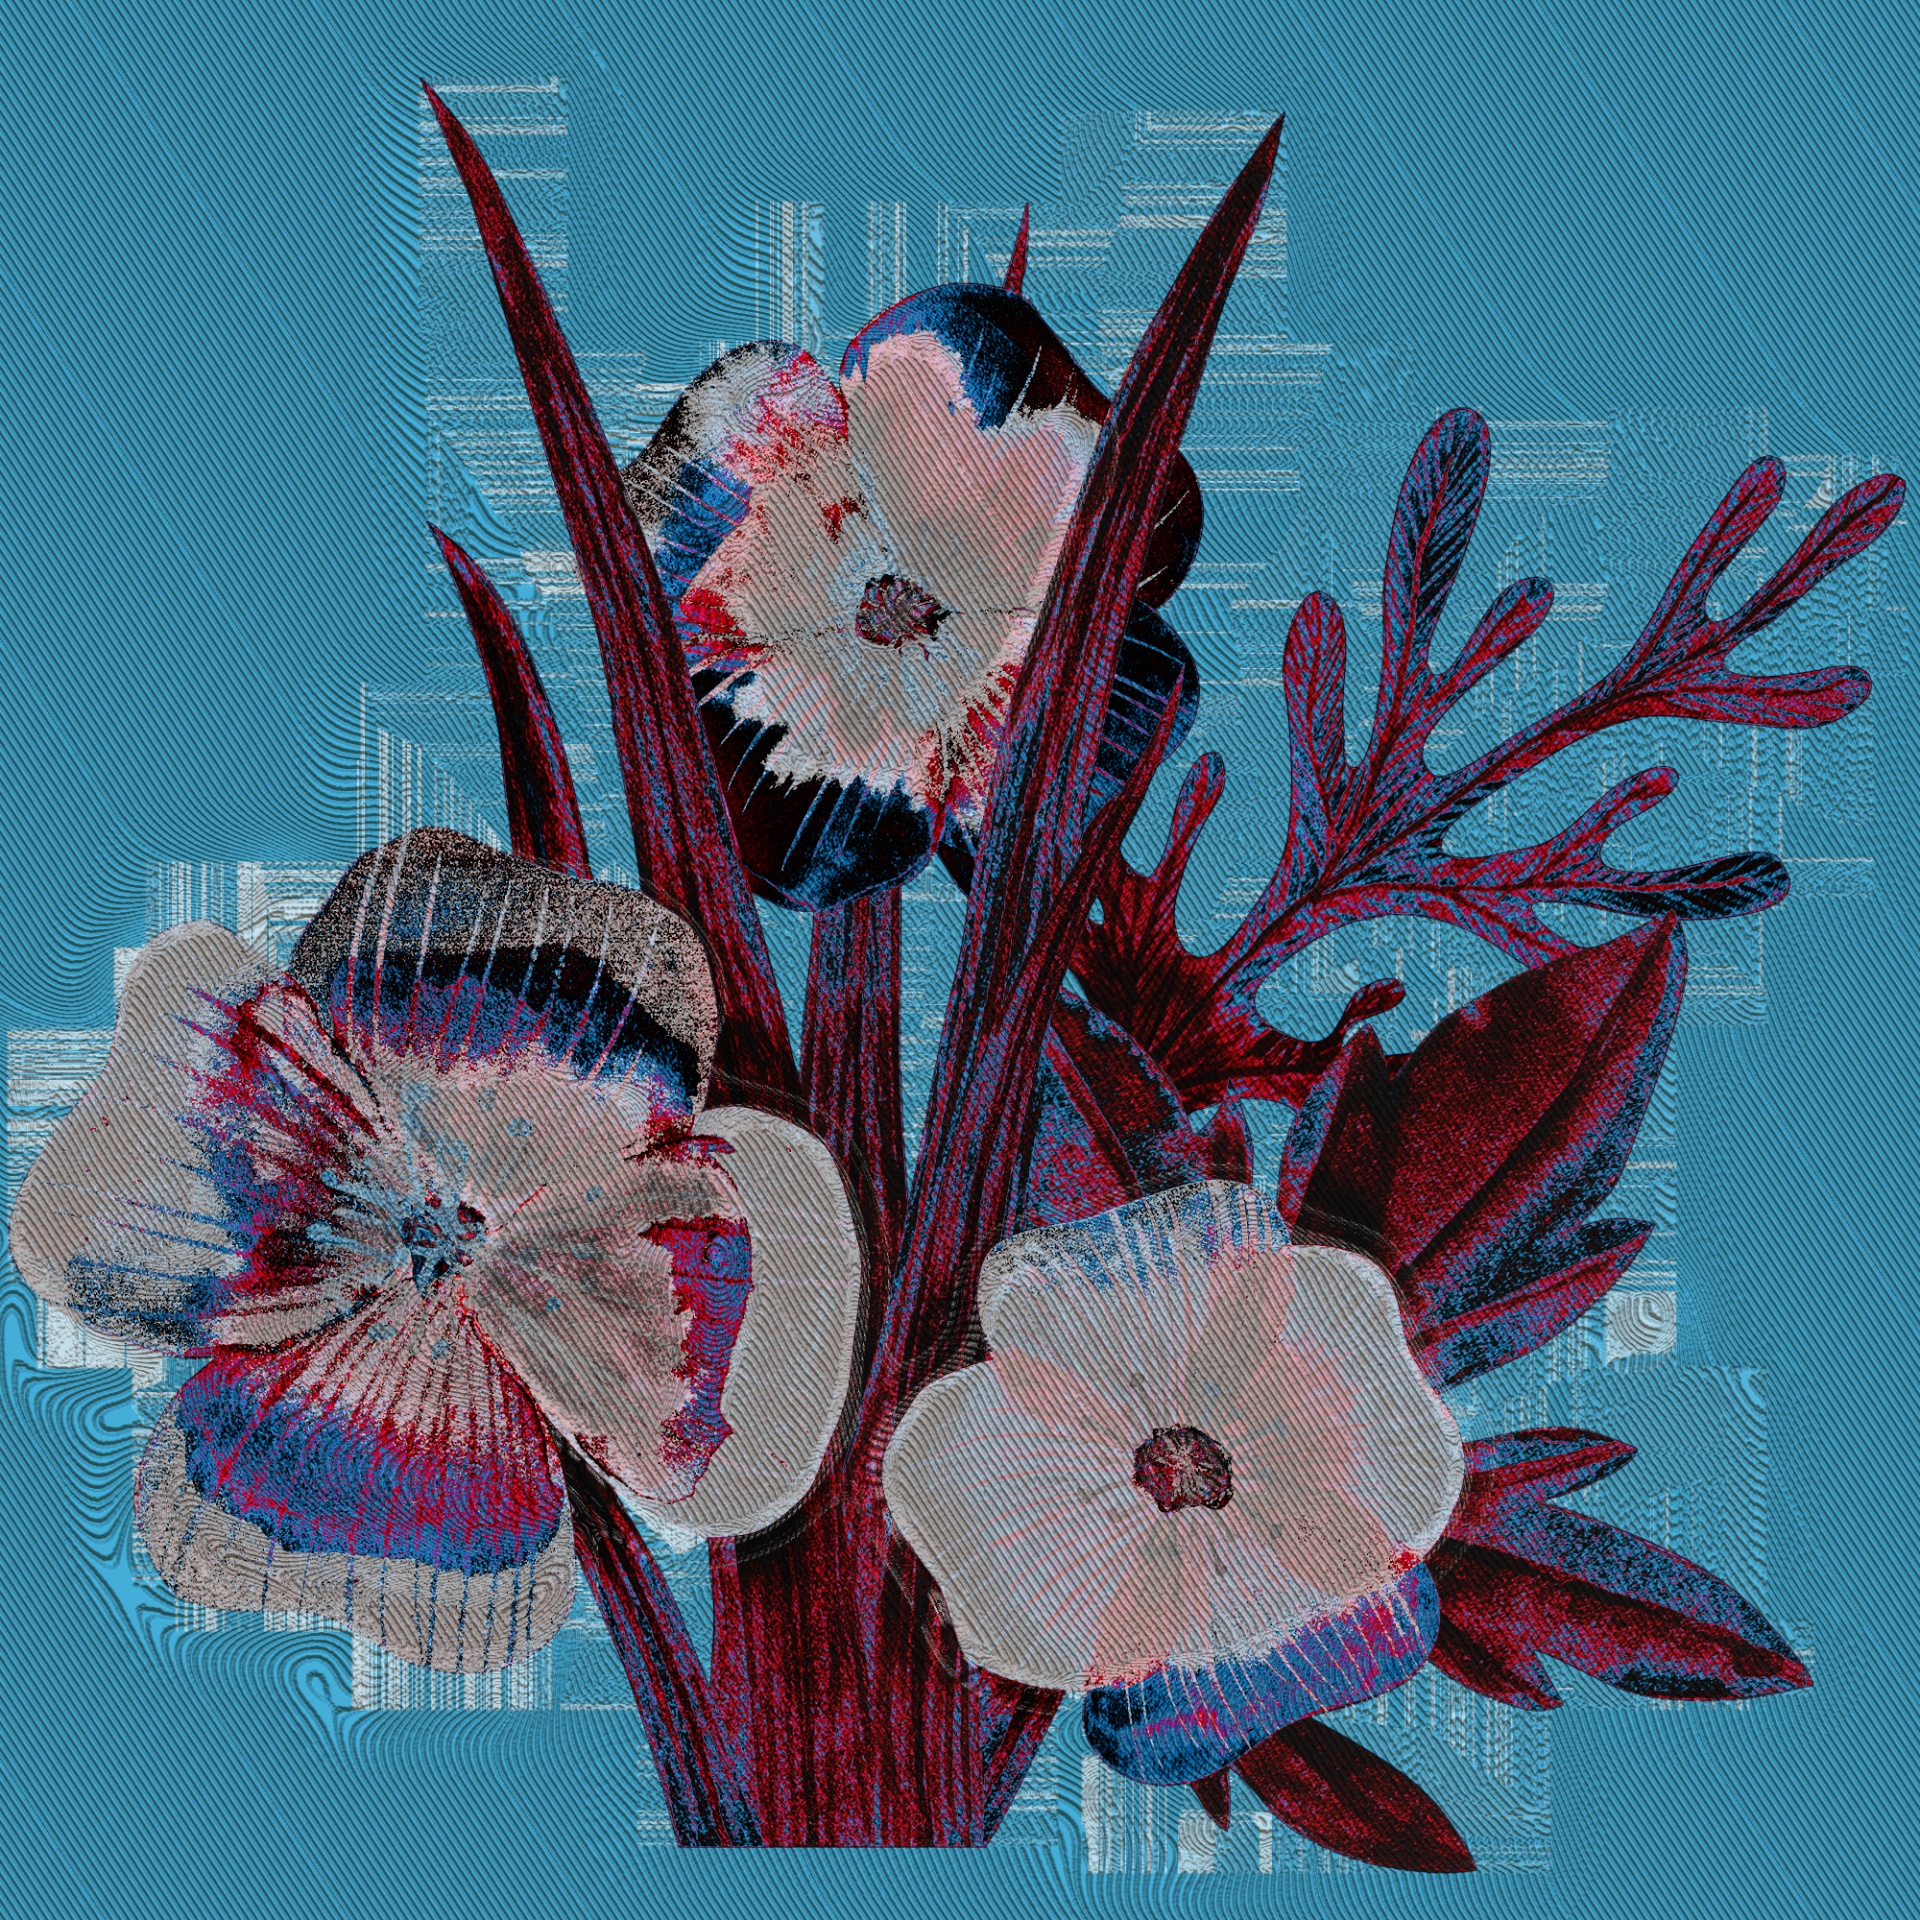 Contemporary Digital Art Flowers